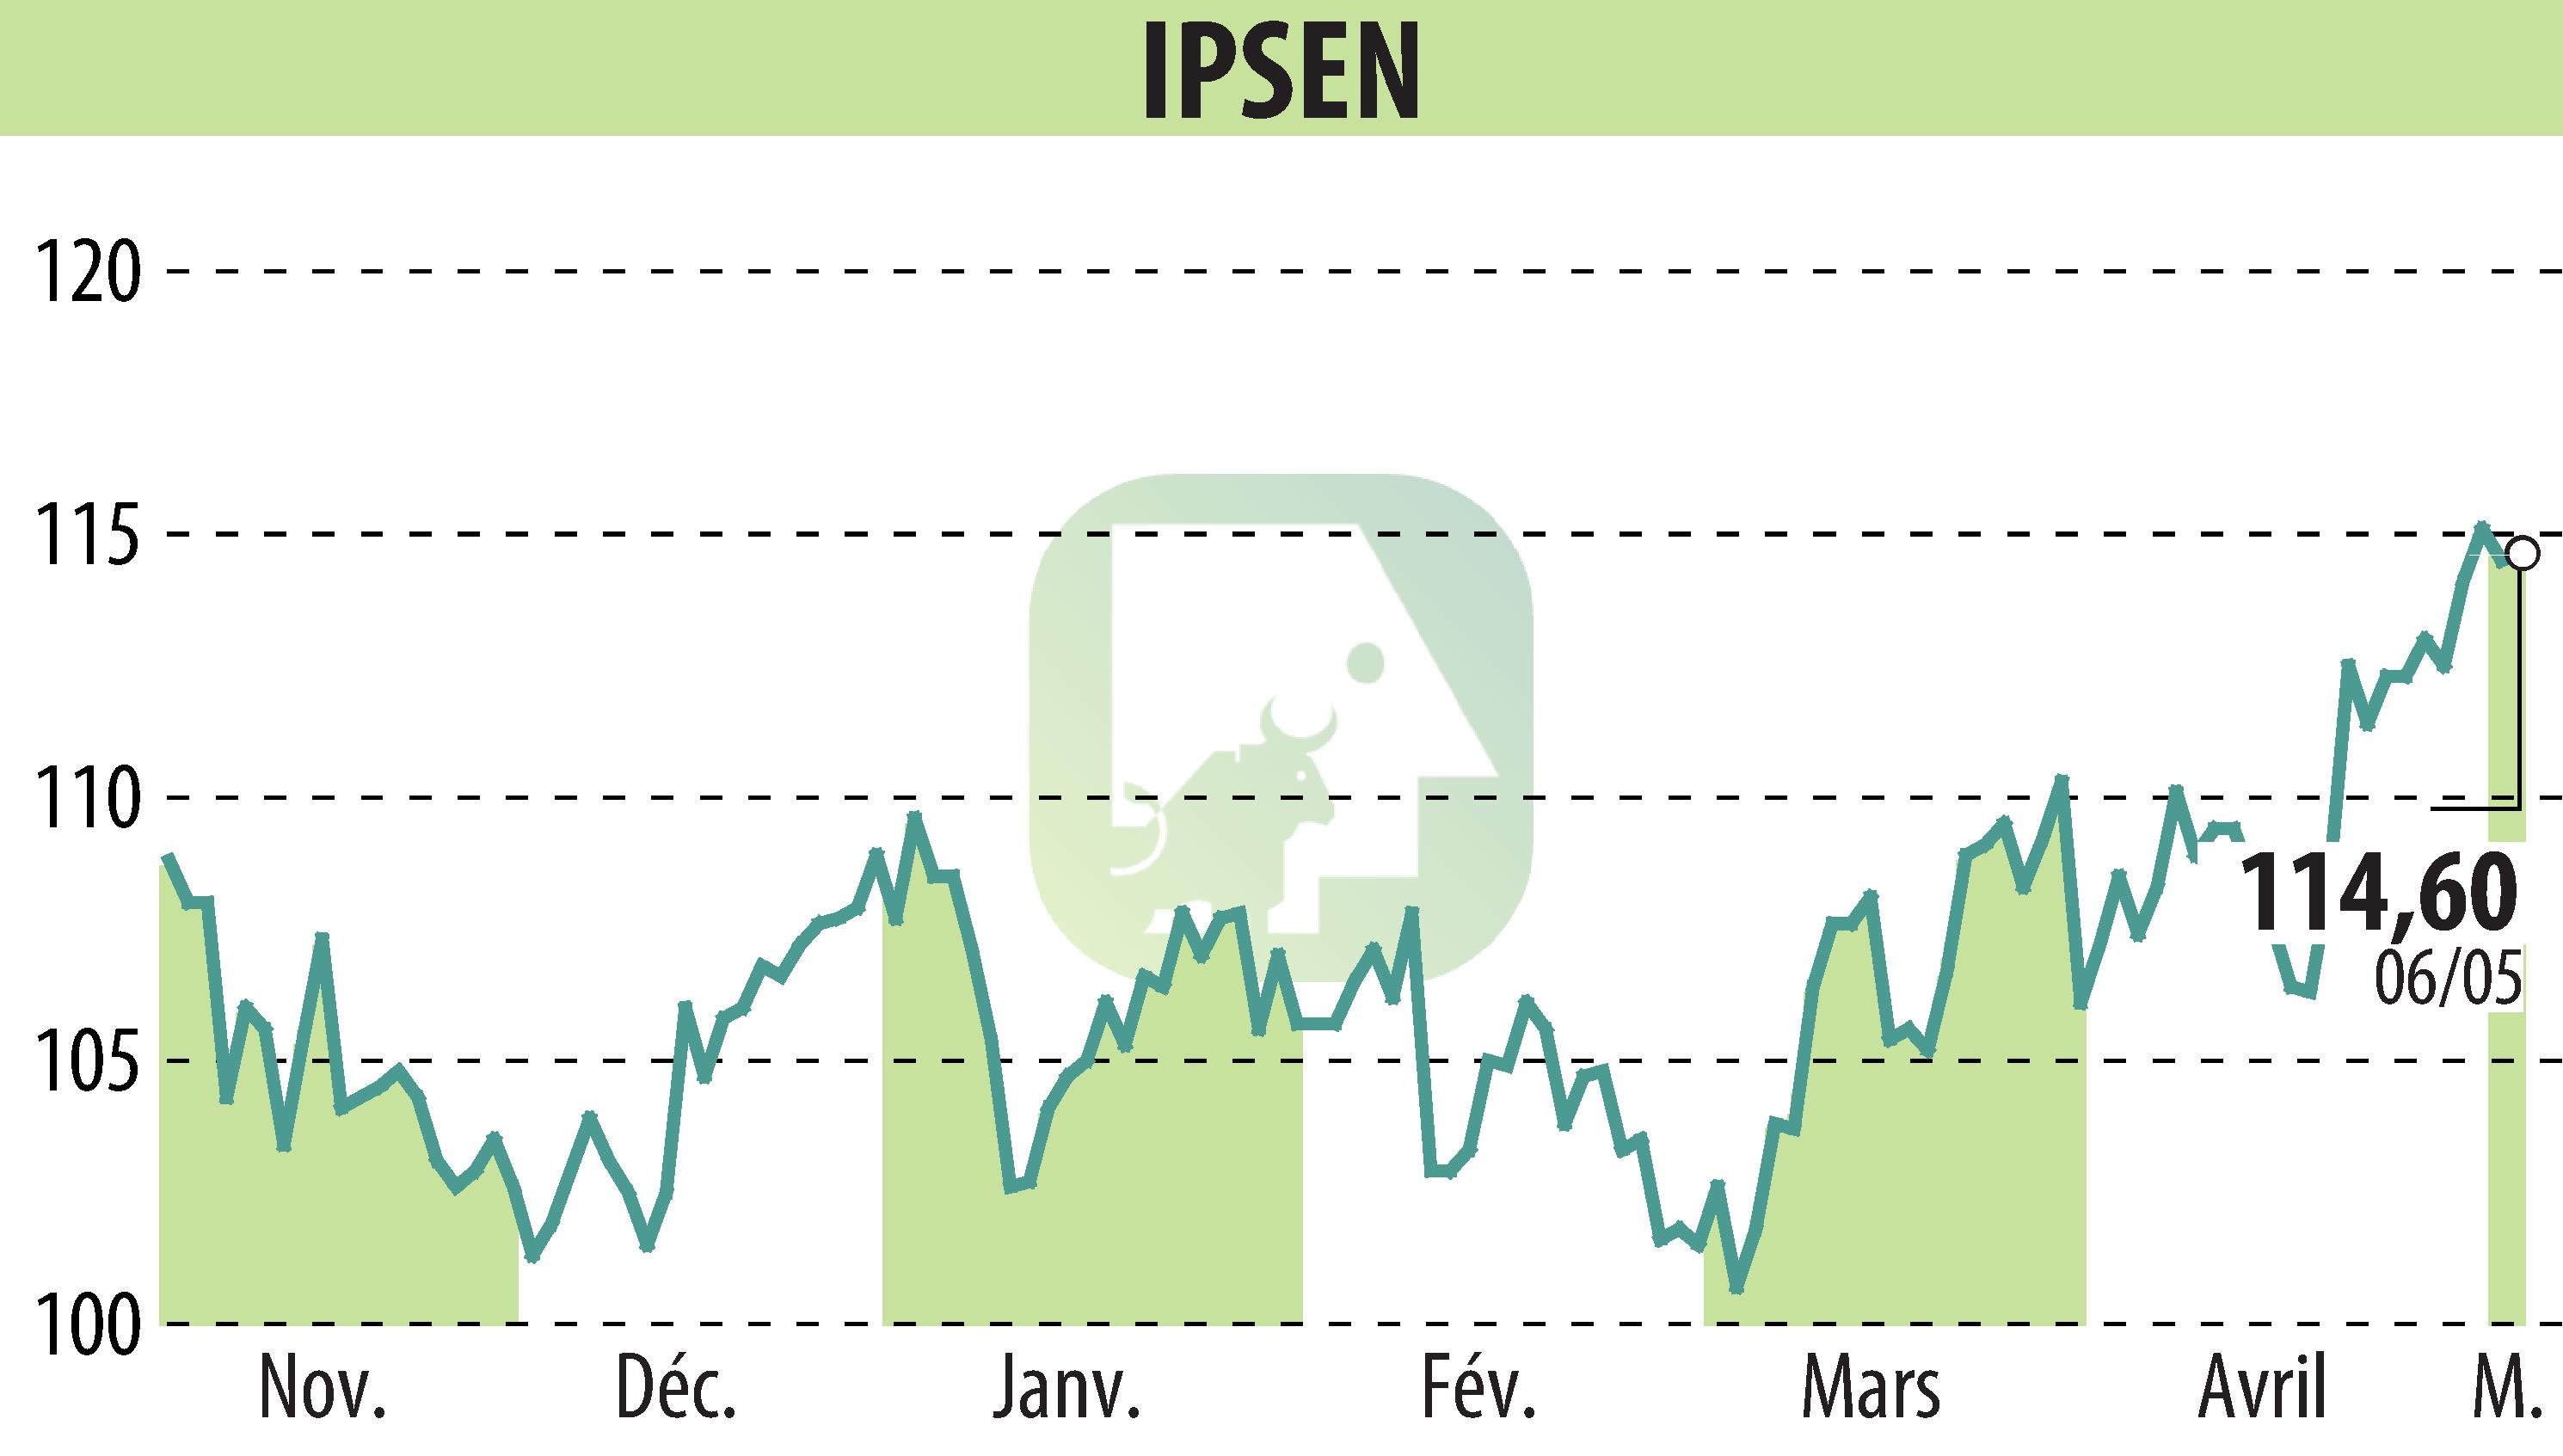 Stock price chart of IPSEN (EPA:IPN) showing fluctuations.